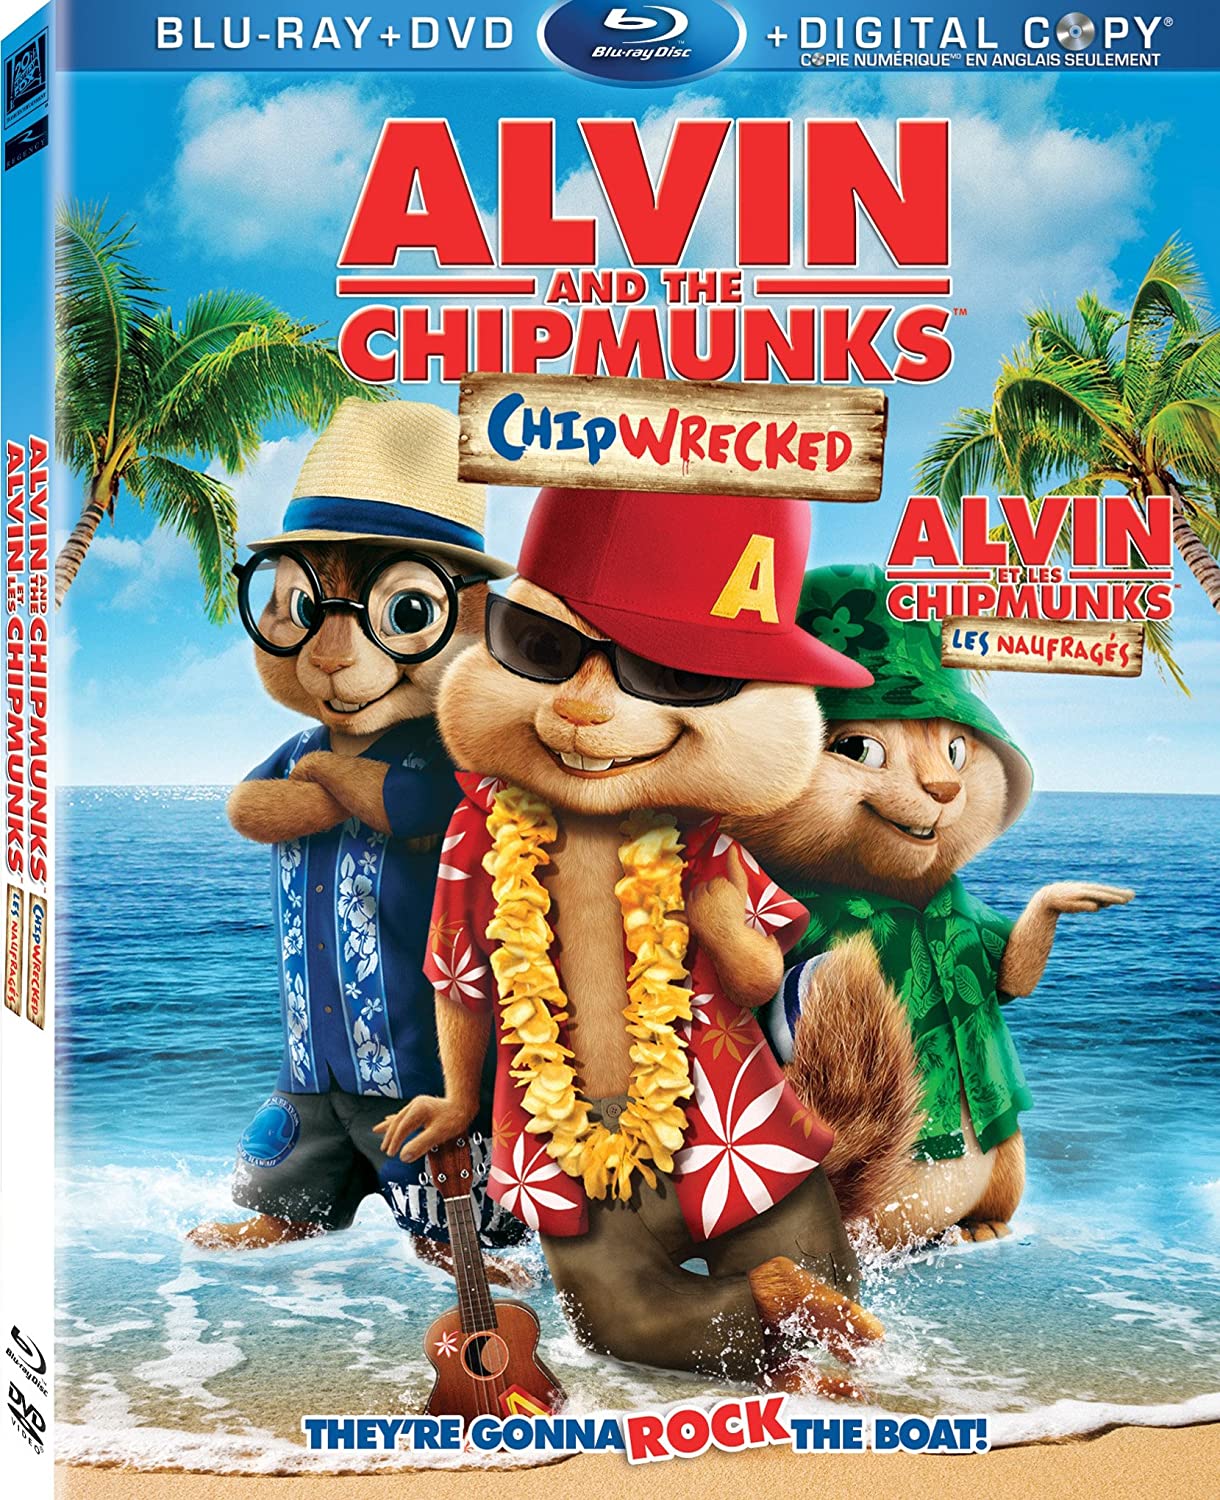 Alvin and the Chipmunks: Chipwrecked (Blu-ray + DVD + Digital Copy) (Bilingual)